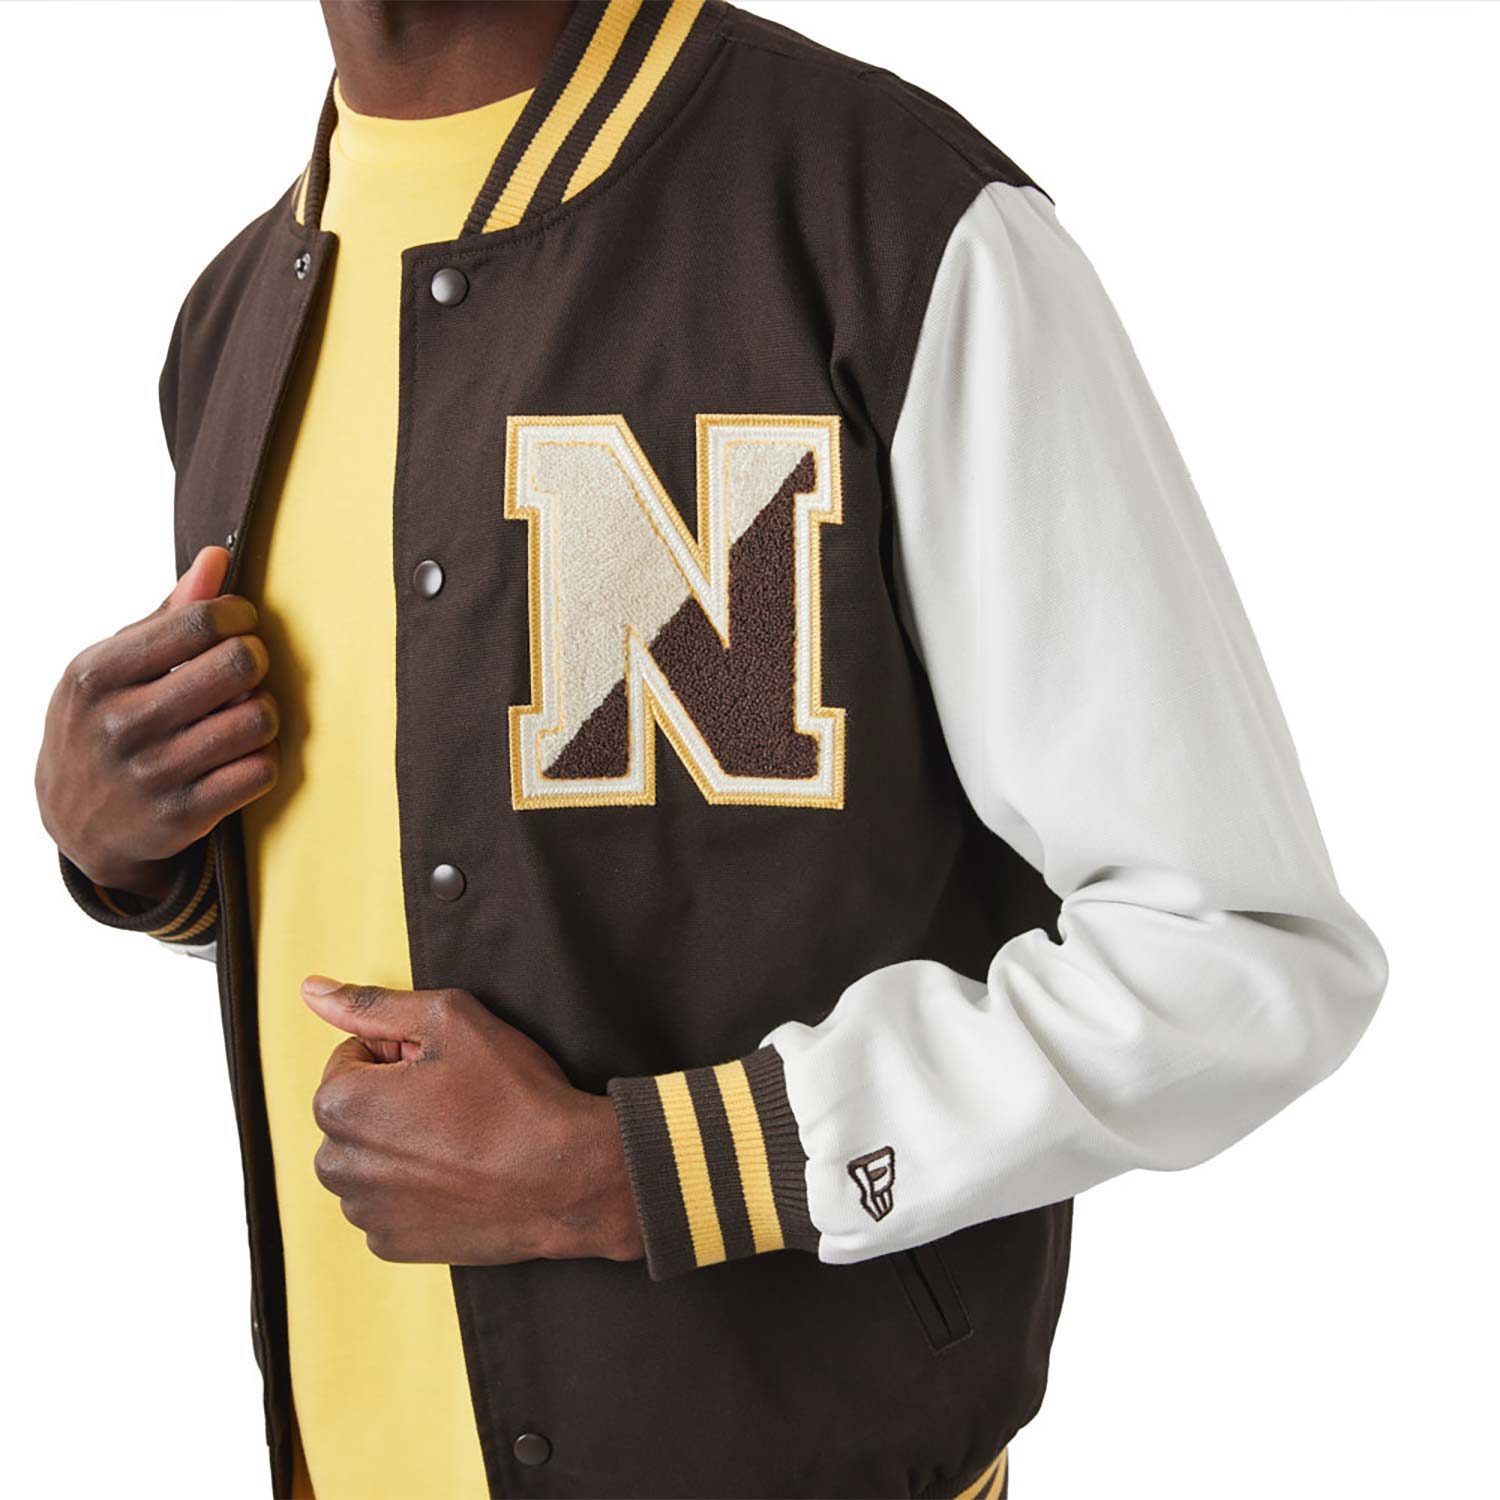 New Era Brown Varsity Jacket